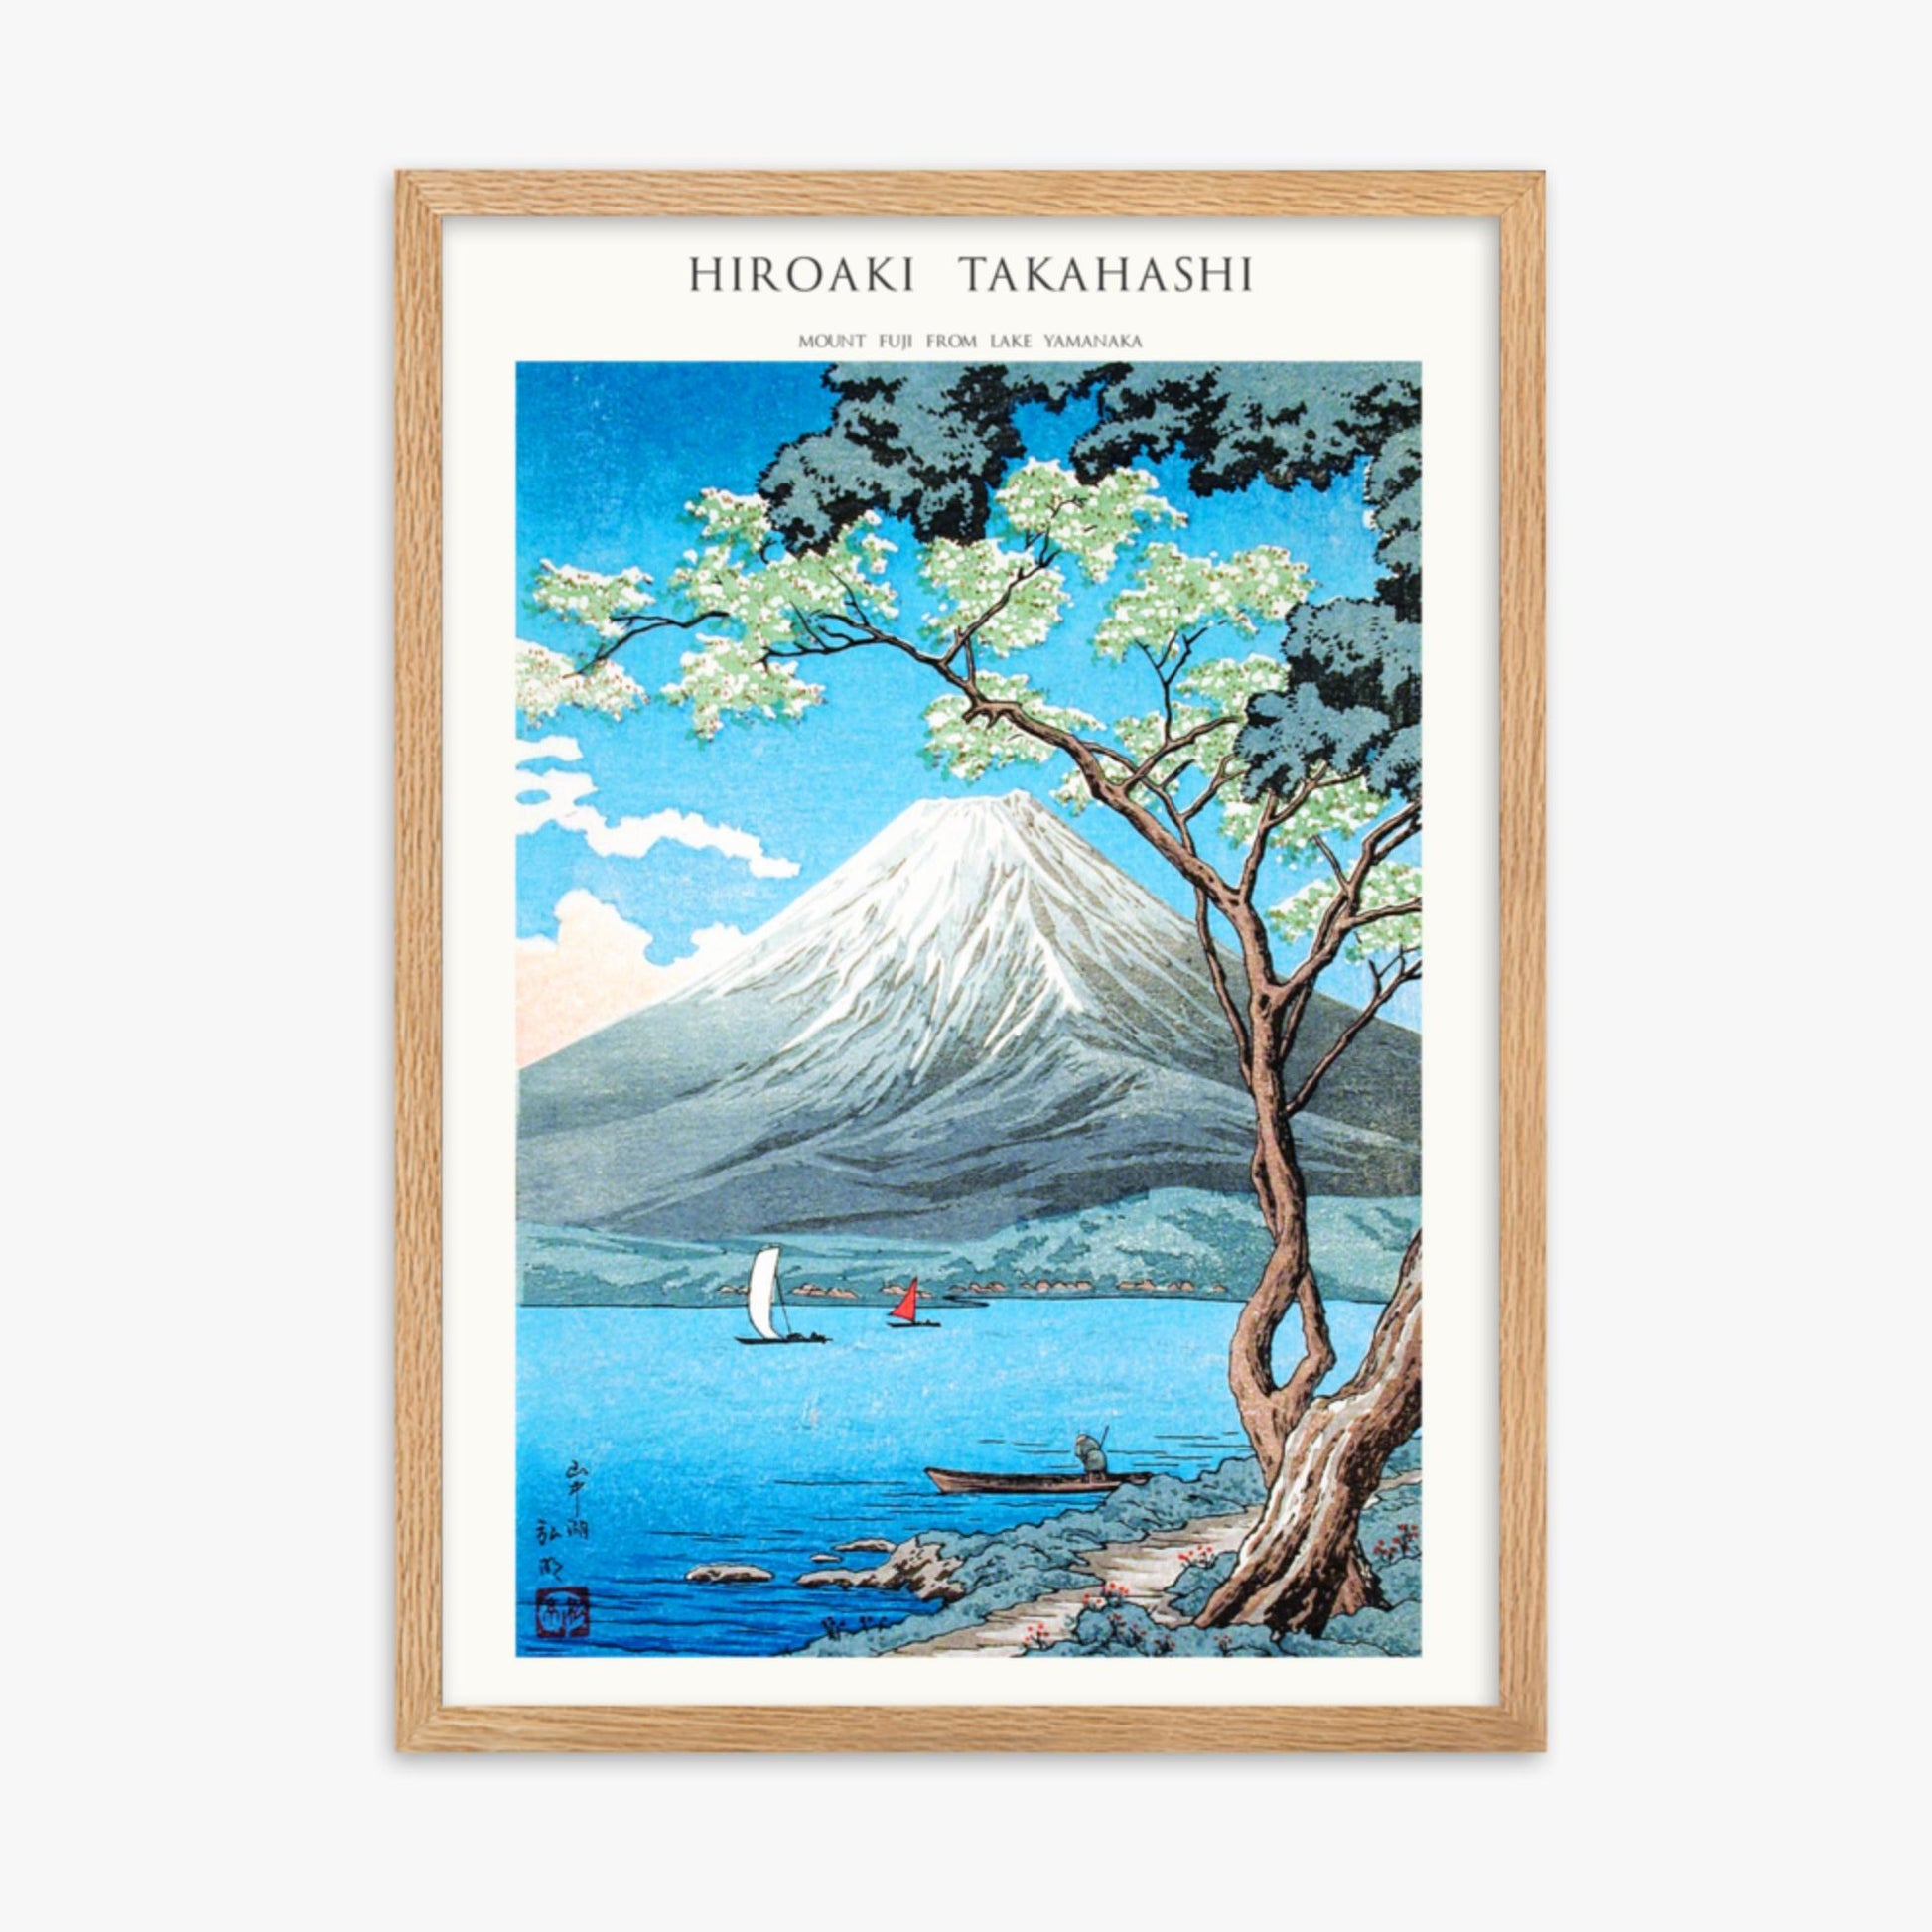 Hiroaki Takahashi - Mount Fuji from Lake Yamanaka - Decoration 50x70 cm Poster With Oak Frame